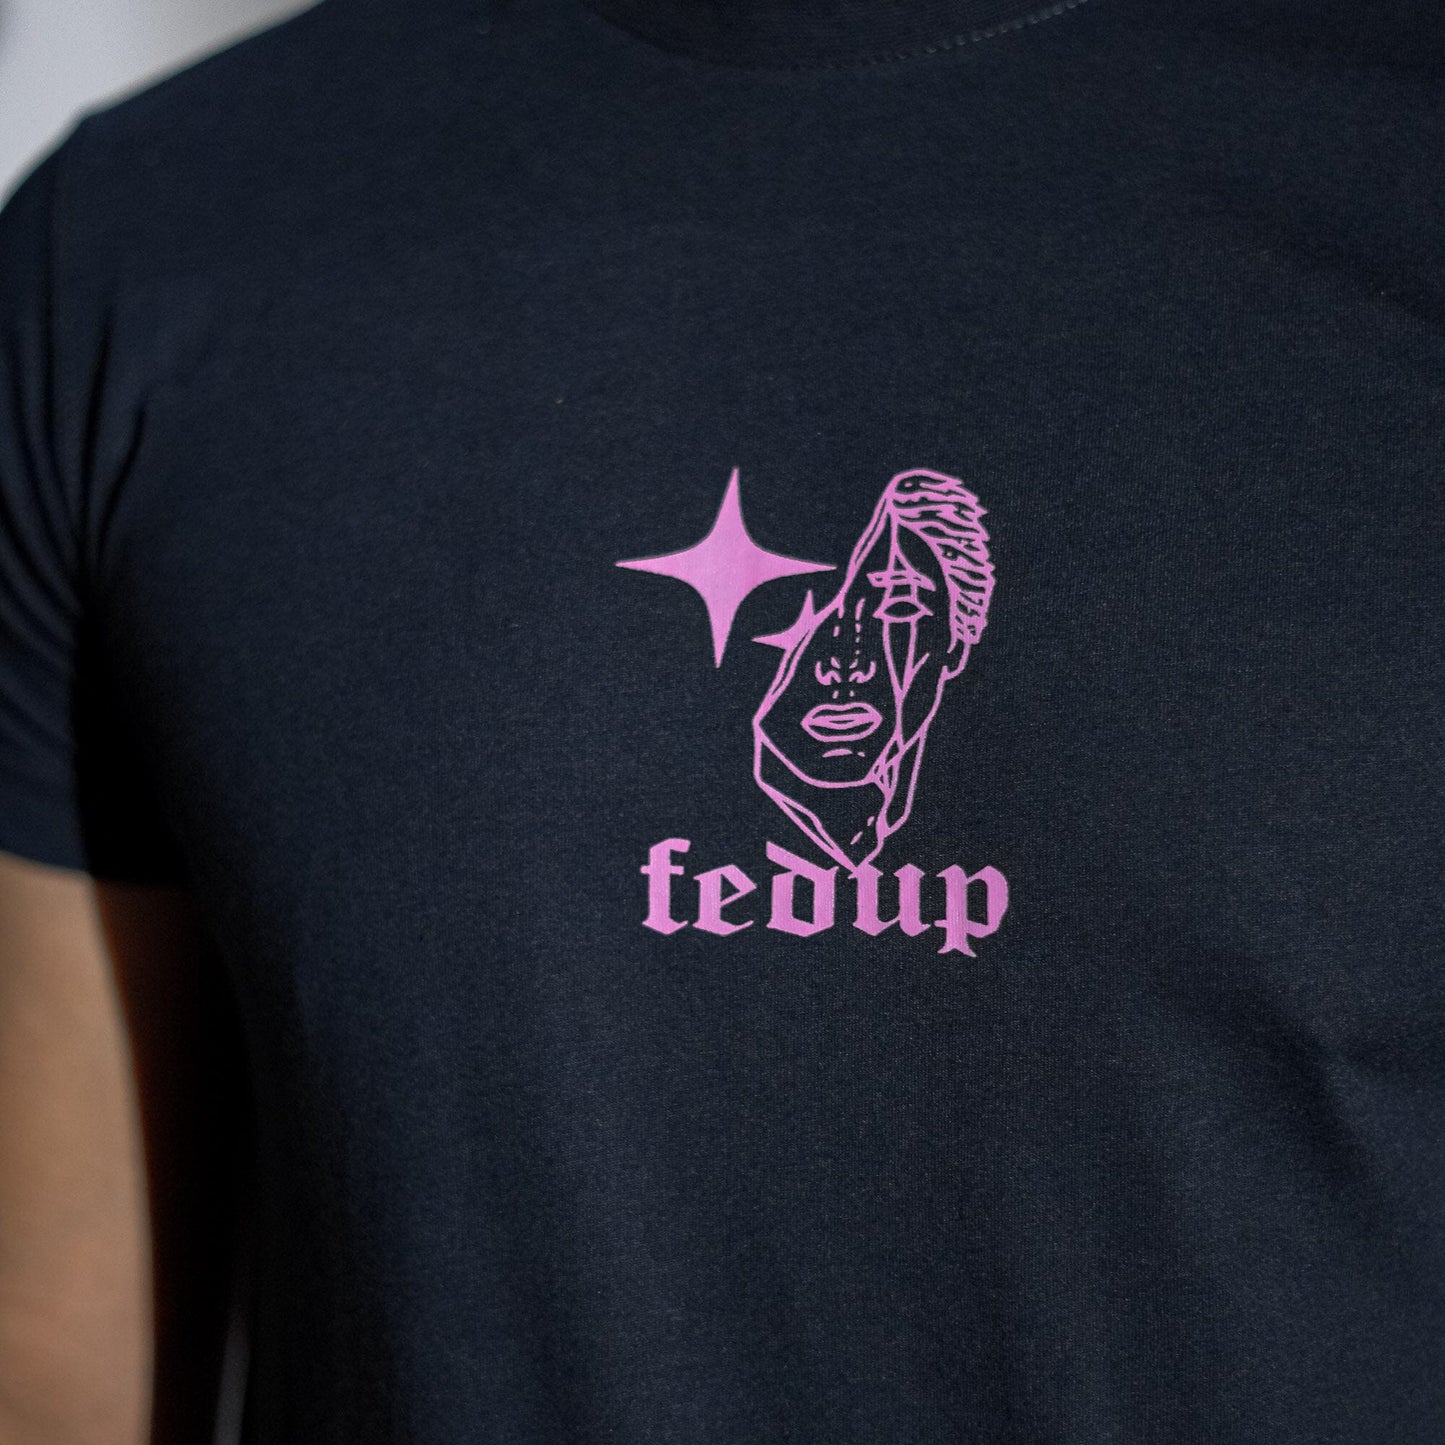 Polo Republica Men's Fedup Dimension Printed Crew Neck Tee Shirt Men's Tee Shirt Polo Republica 